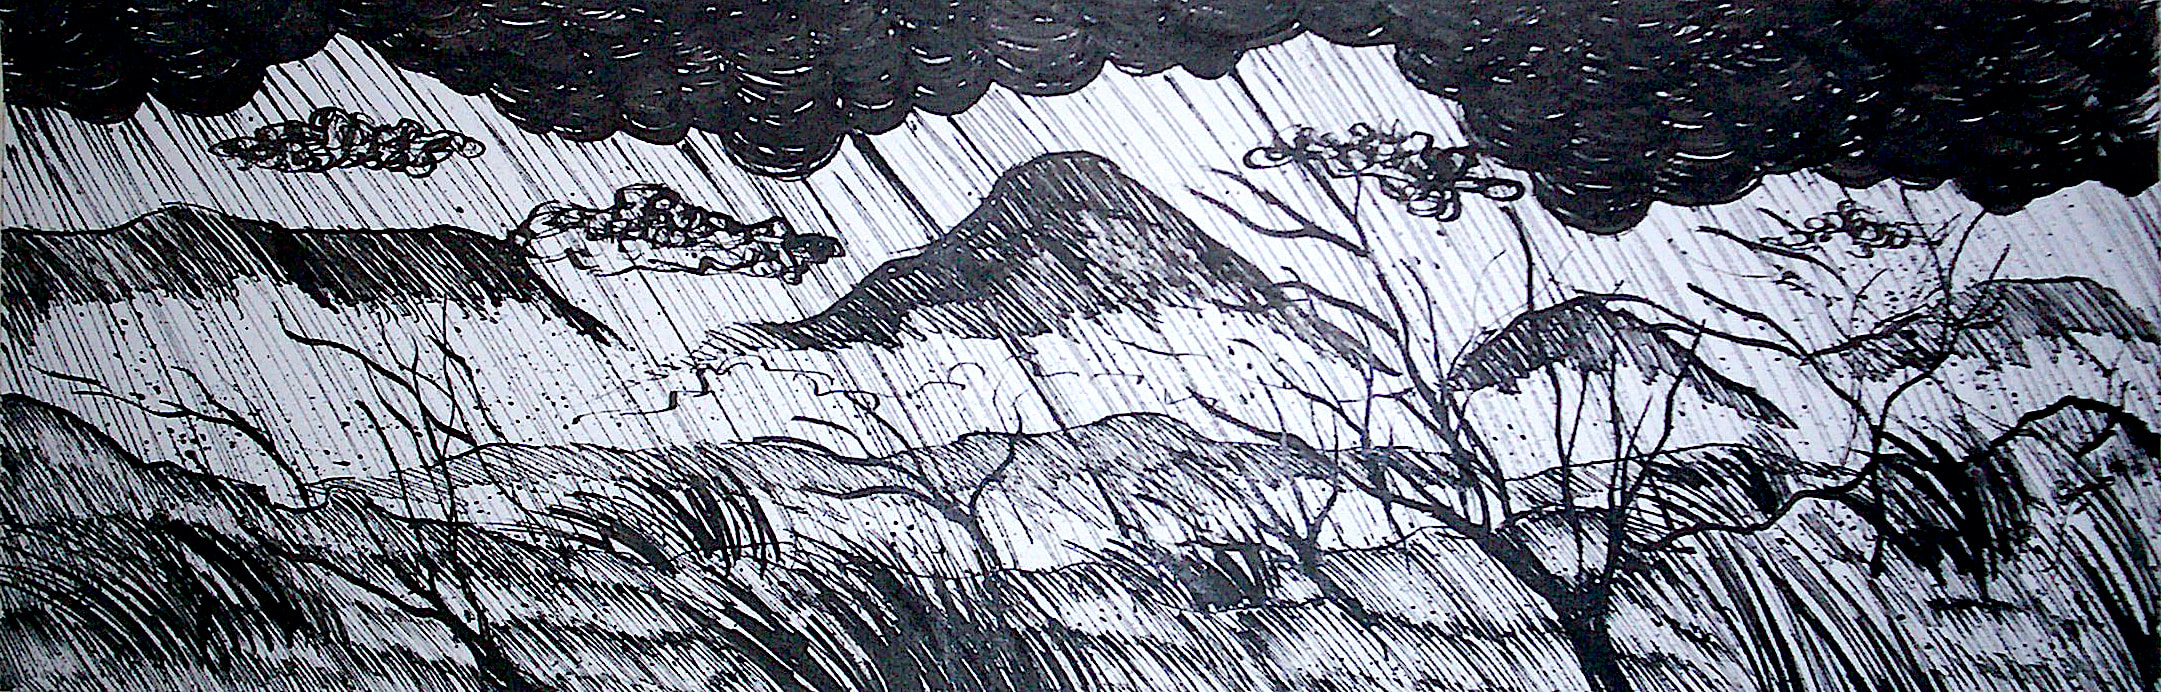 Ink on Paper by Filipino Artist Jill Arwen Posadas entitled Untitled Stormy Landscape